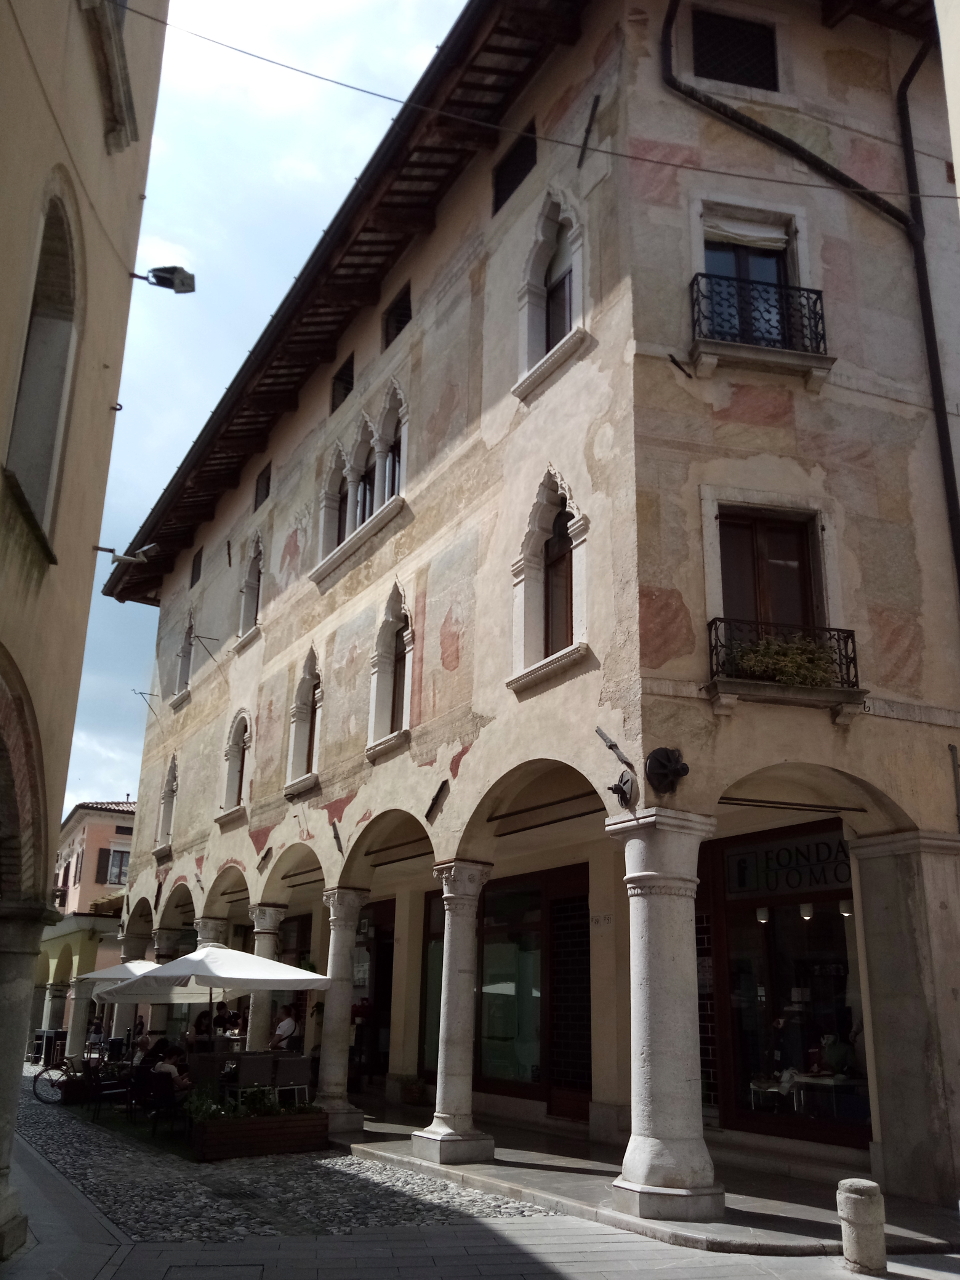 Palazzo Monaco, Cisternini (palazzo, signorile) - Spilimbergo (PN) 